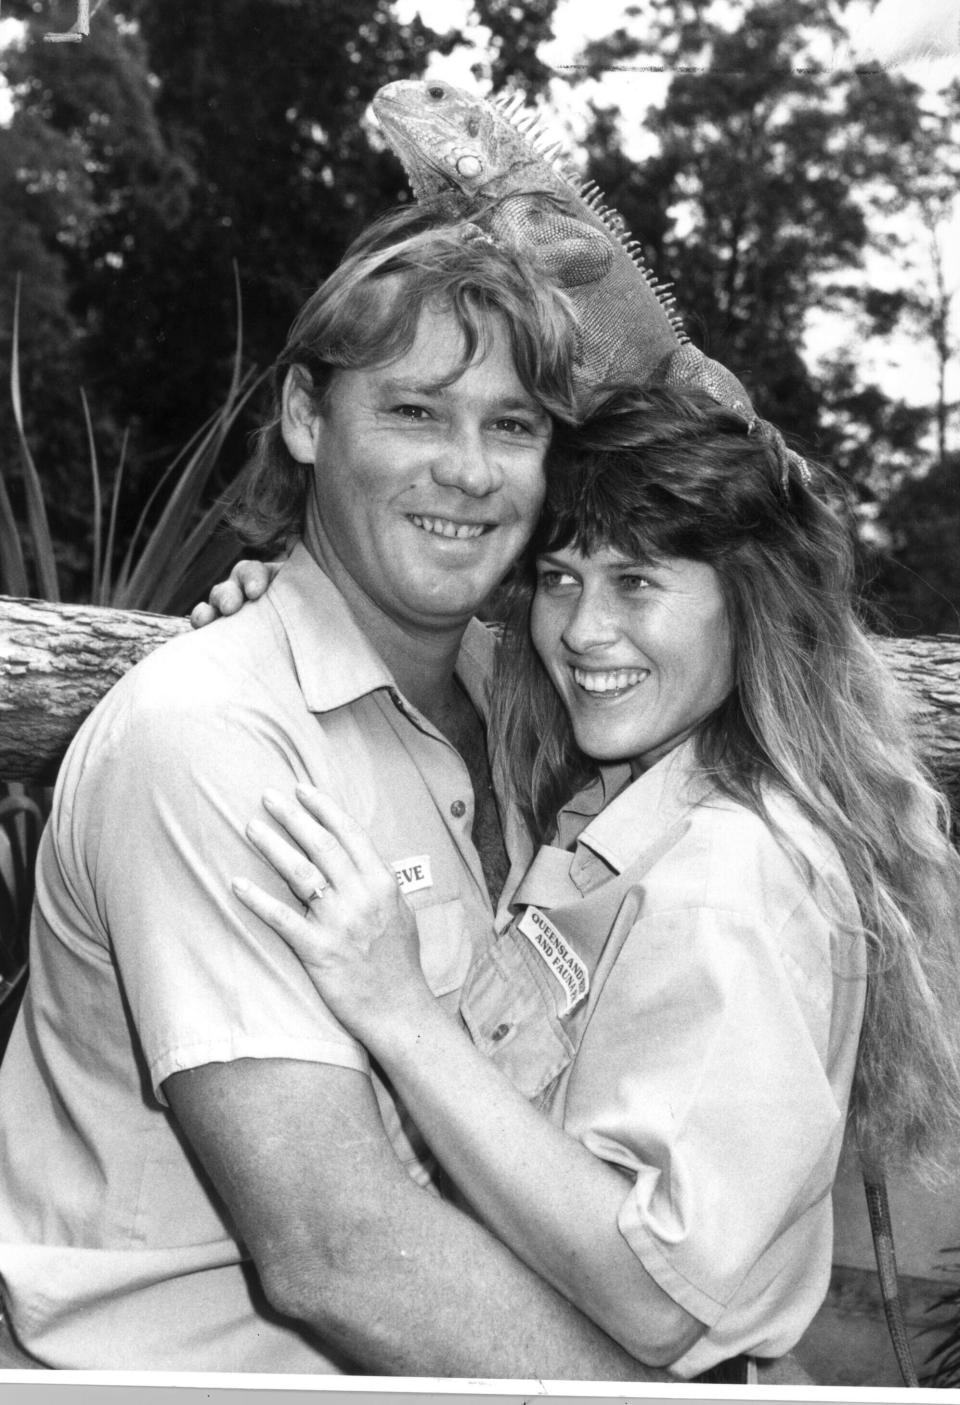 Steve Irwin and his wife Terri with an iguana